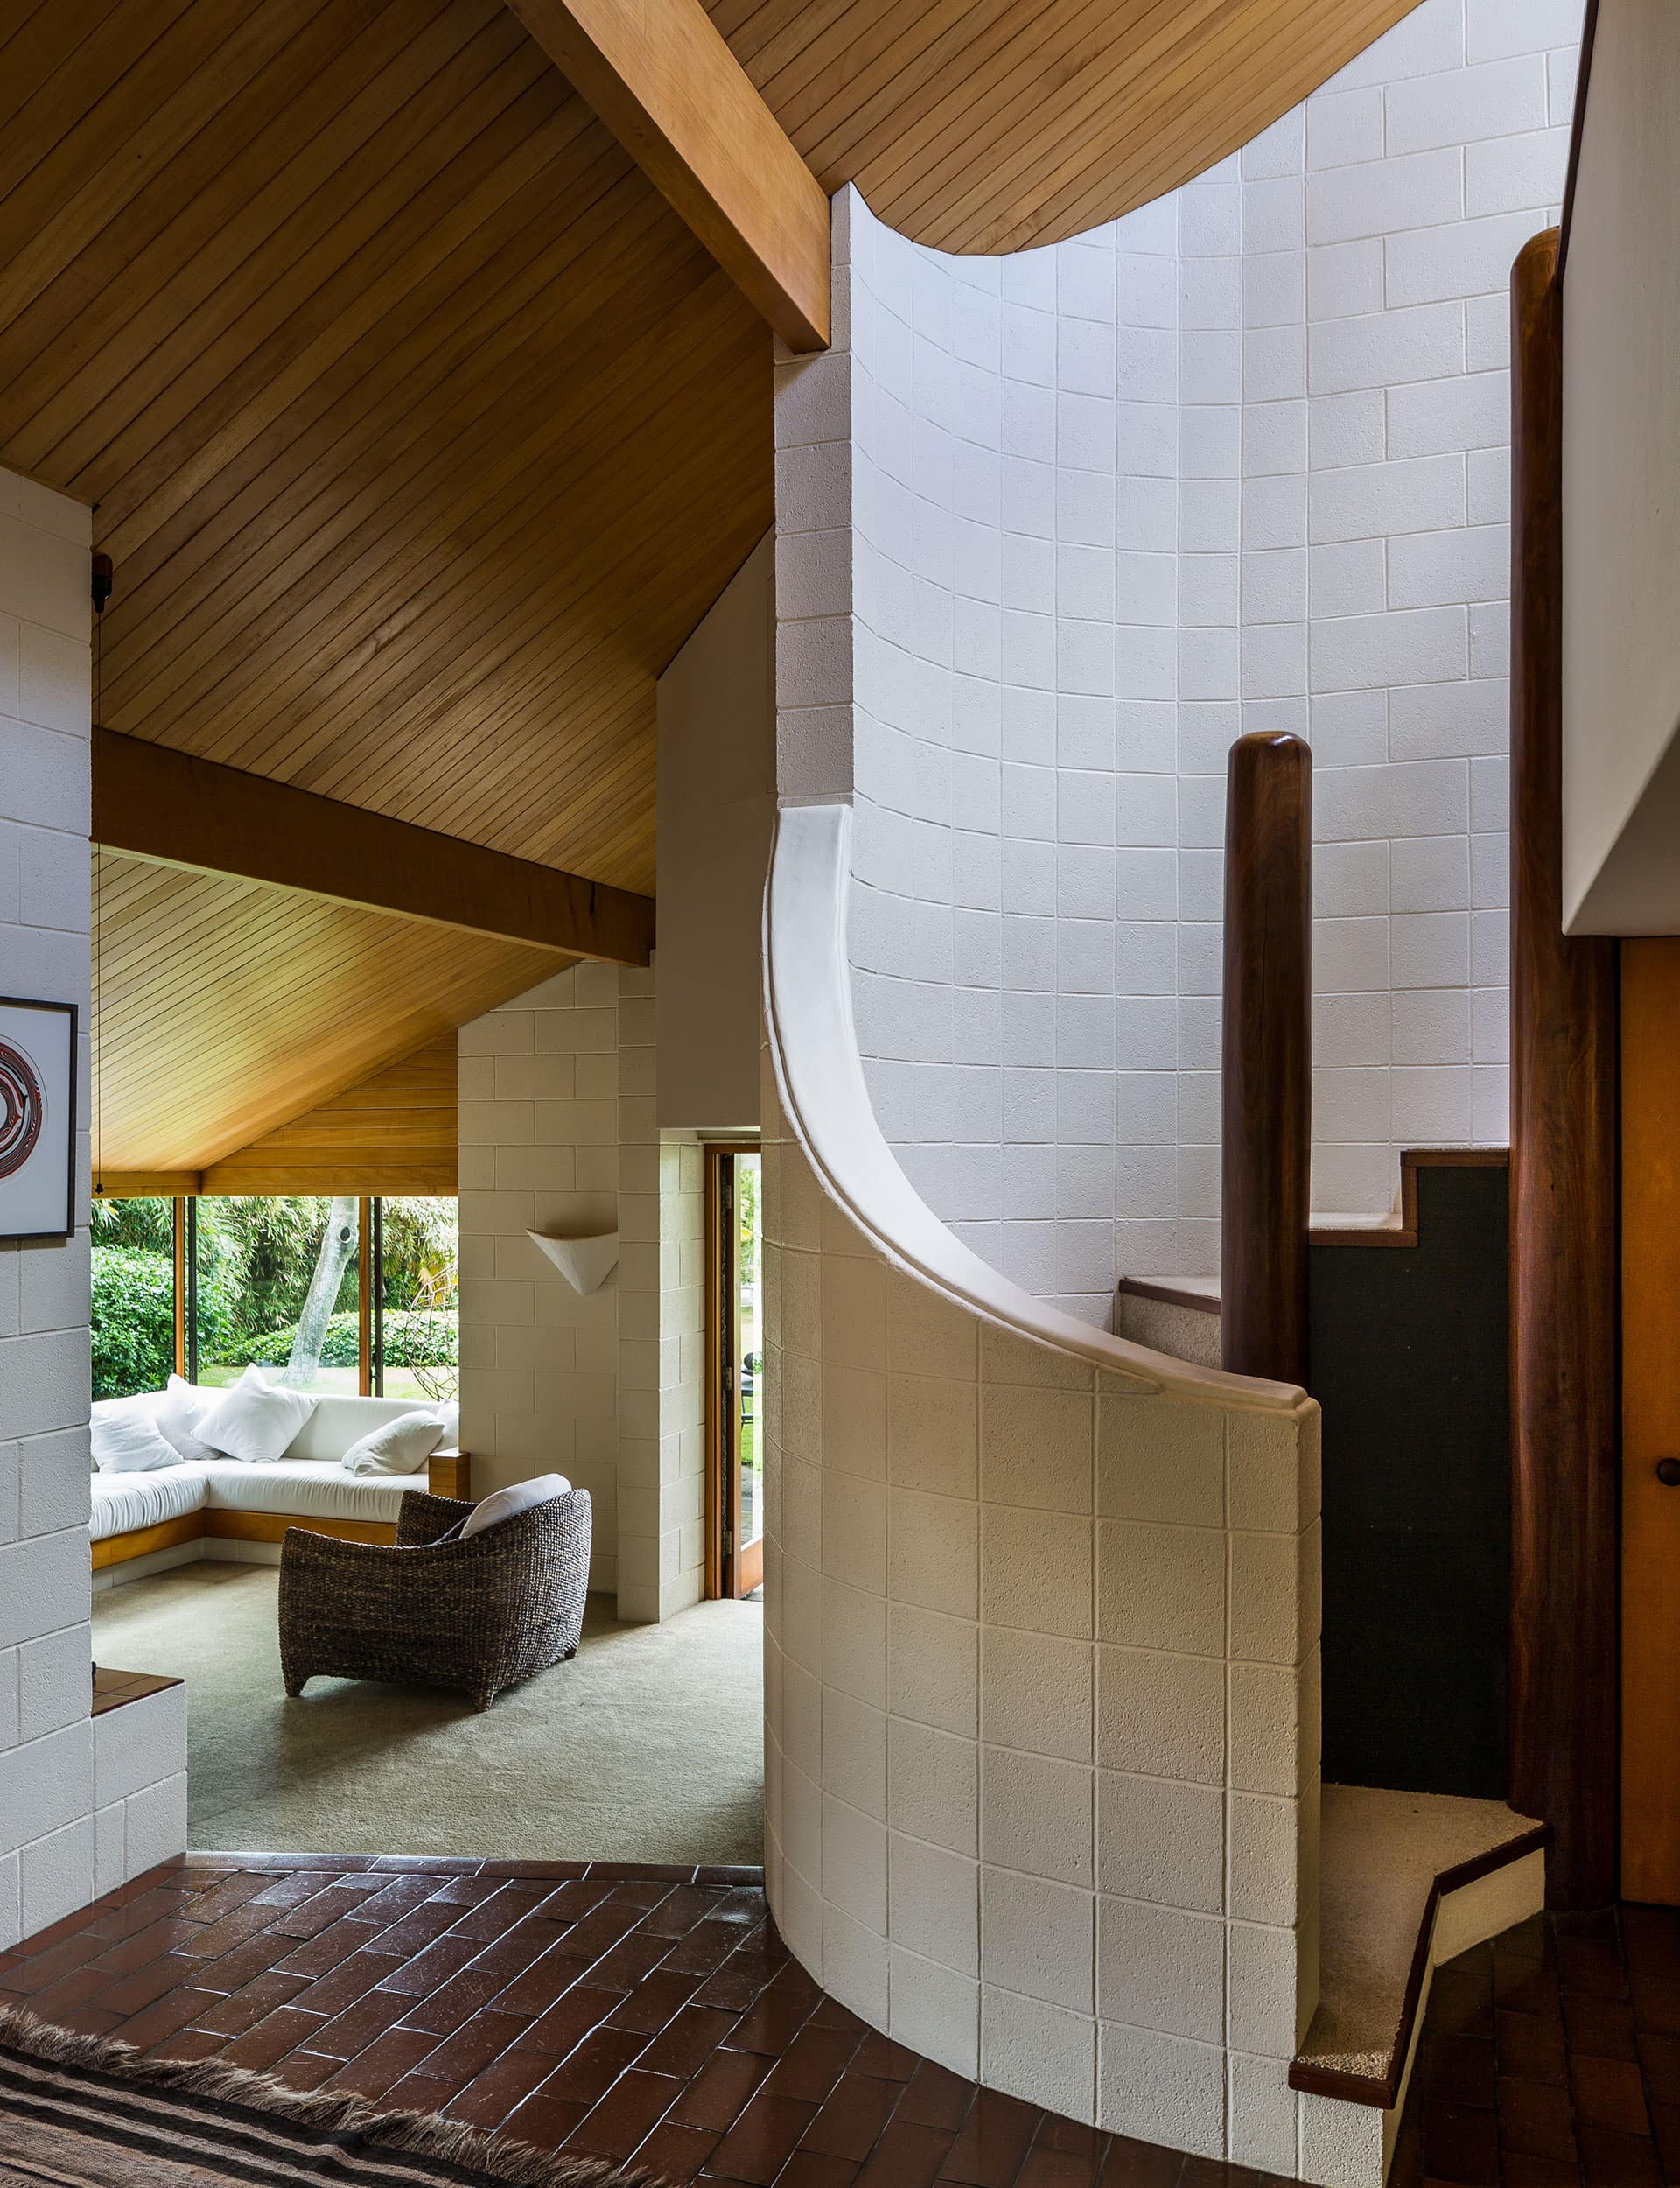 This Haumoana home is the last design of legendary architect John Scott